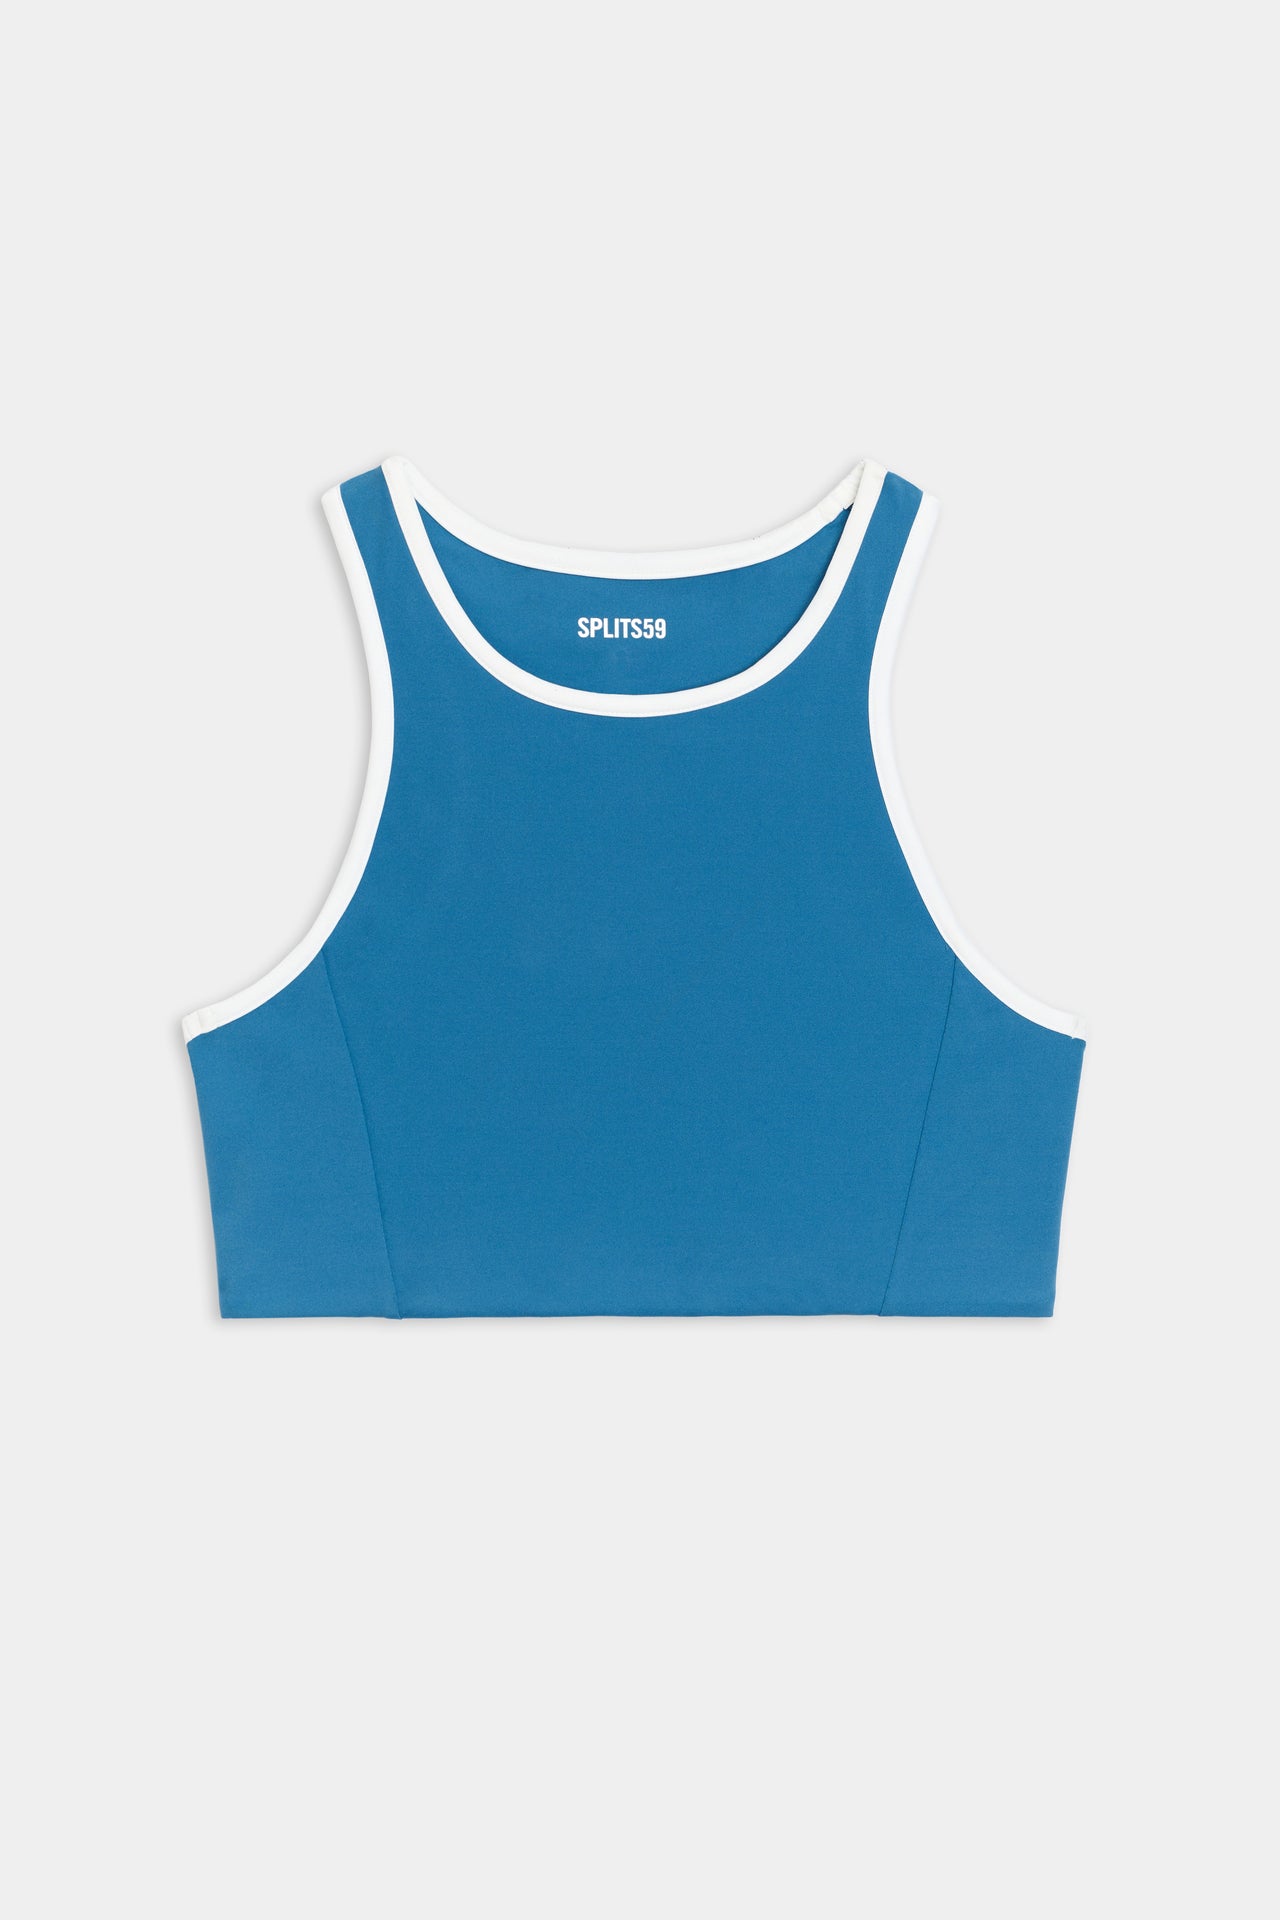 Flat view of blue sports bra with white hem